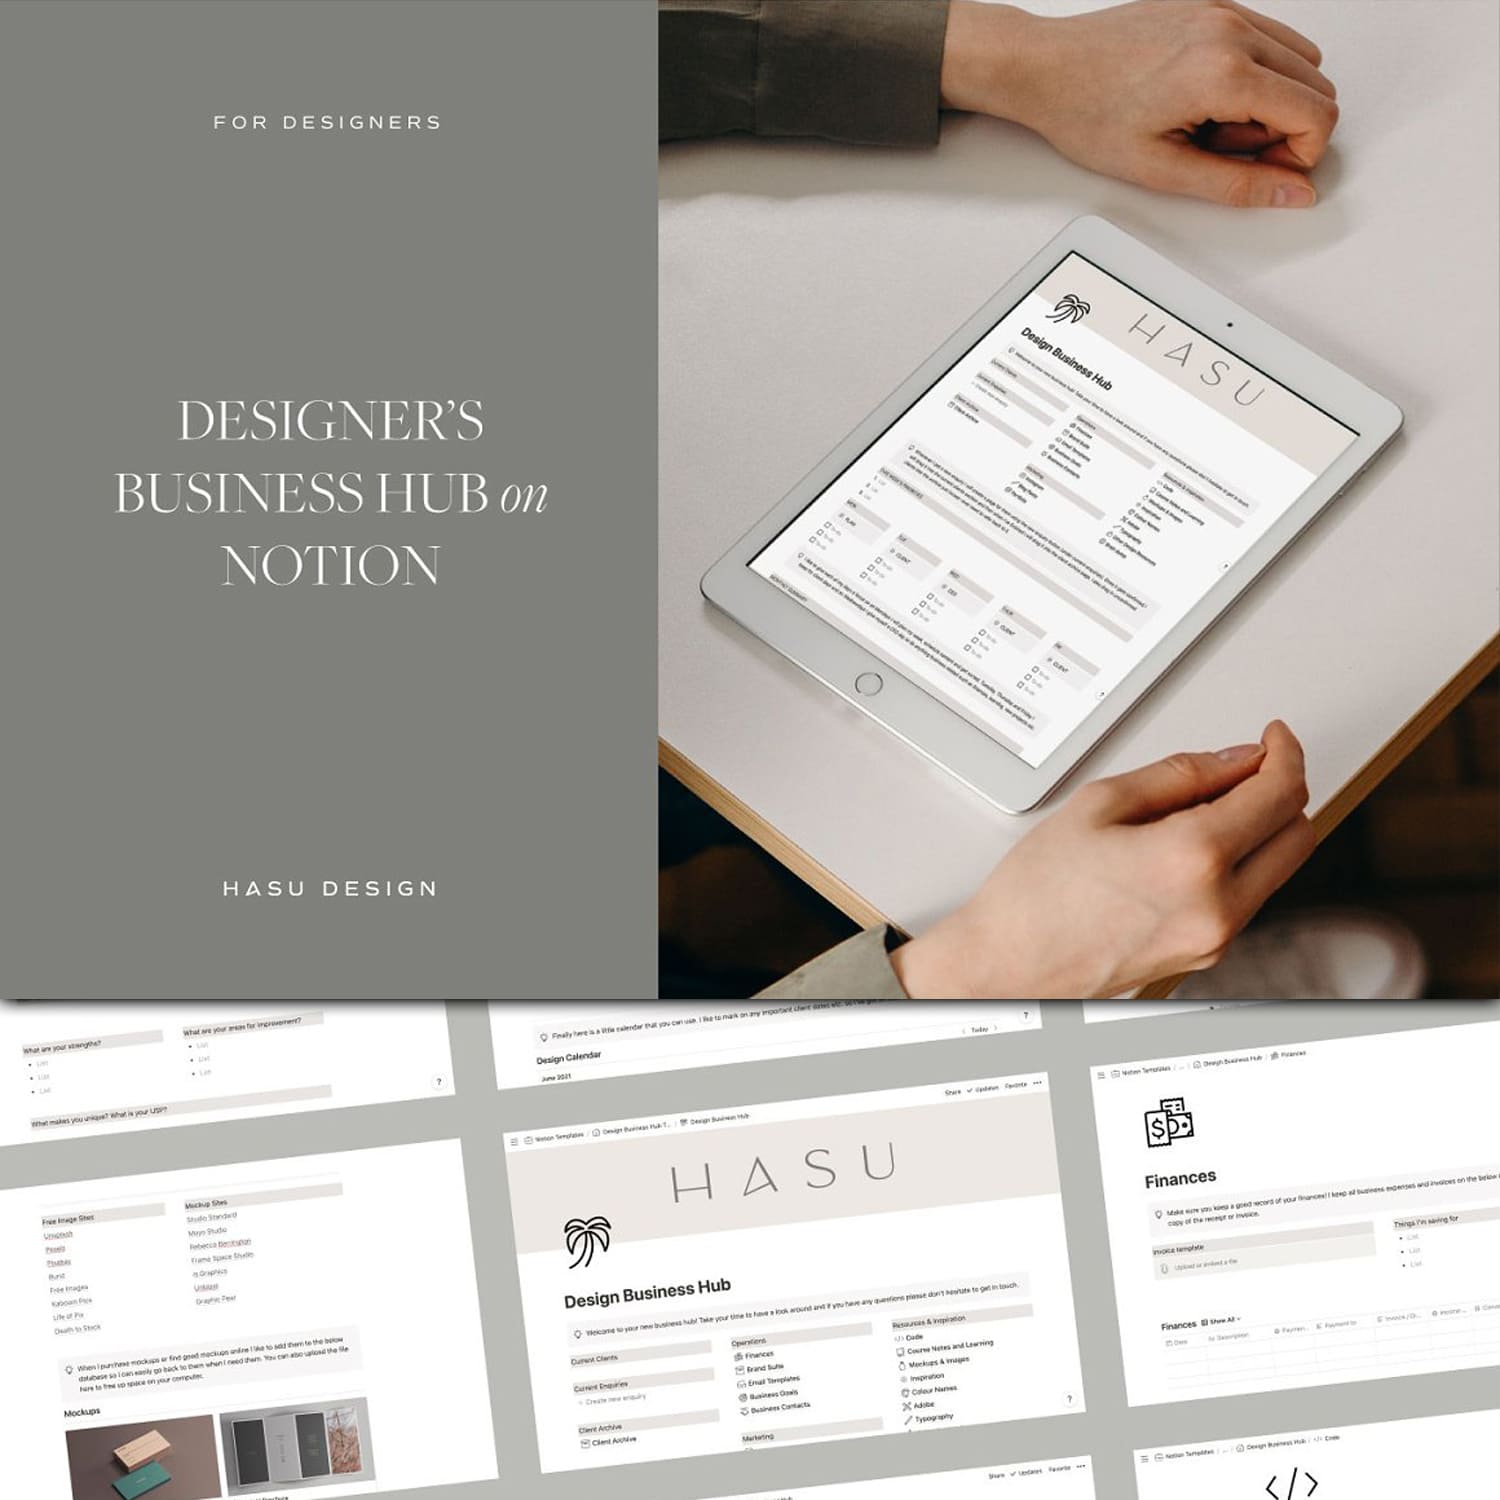 Designer's Business Hub on Notion cover image.